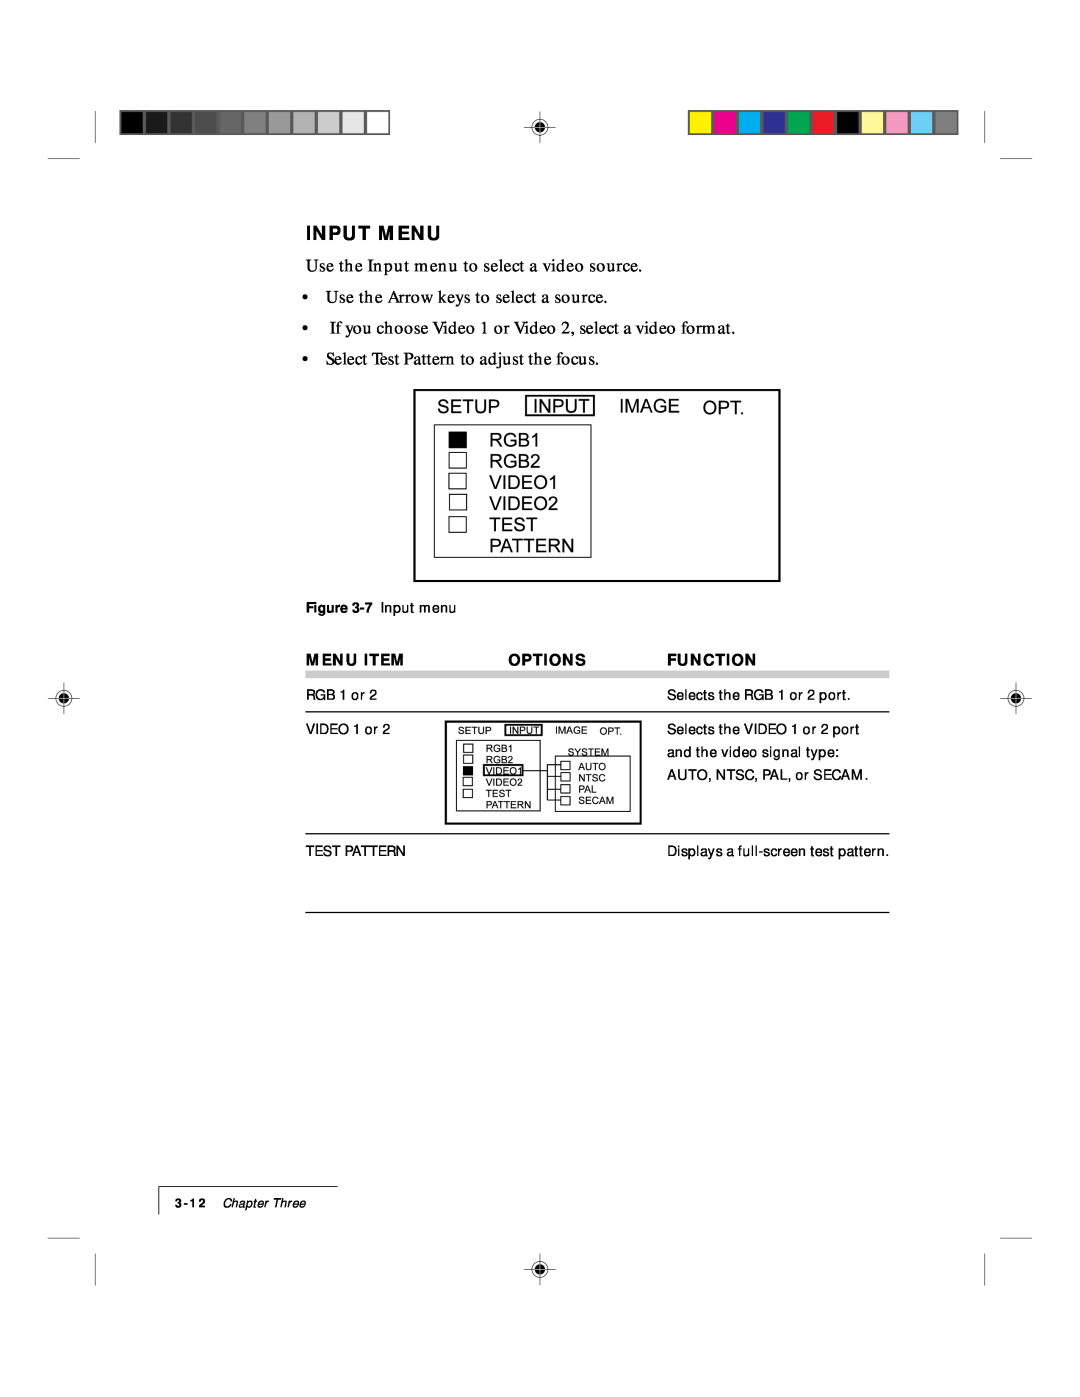 Proxima ASA DP5500 manual Input Menu, Menu Item, Options, Function, Chapter Three 